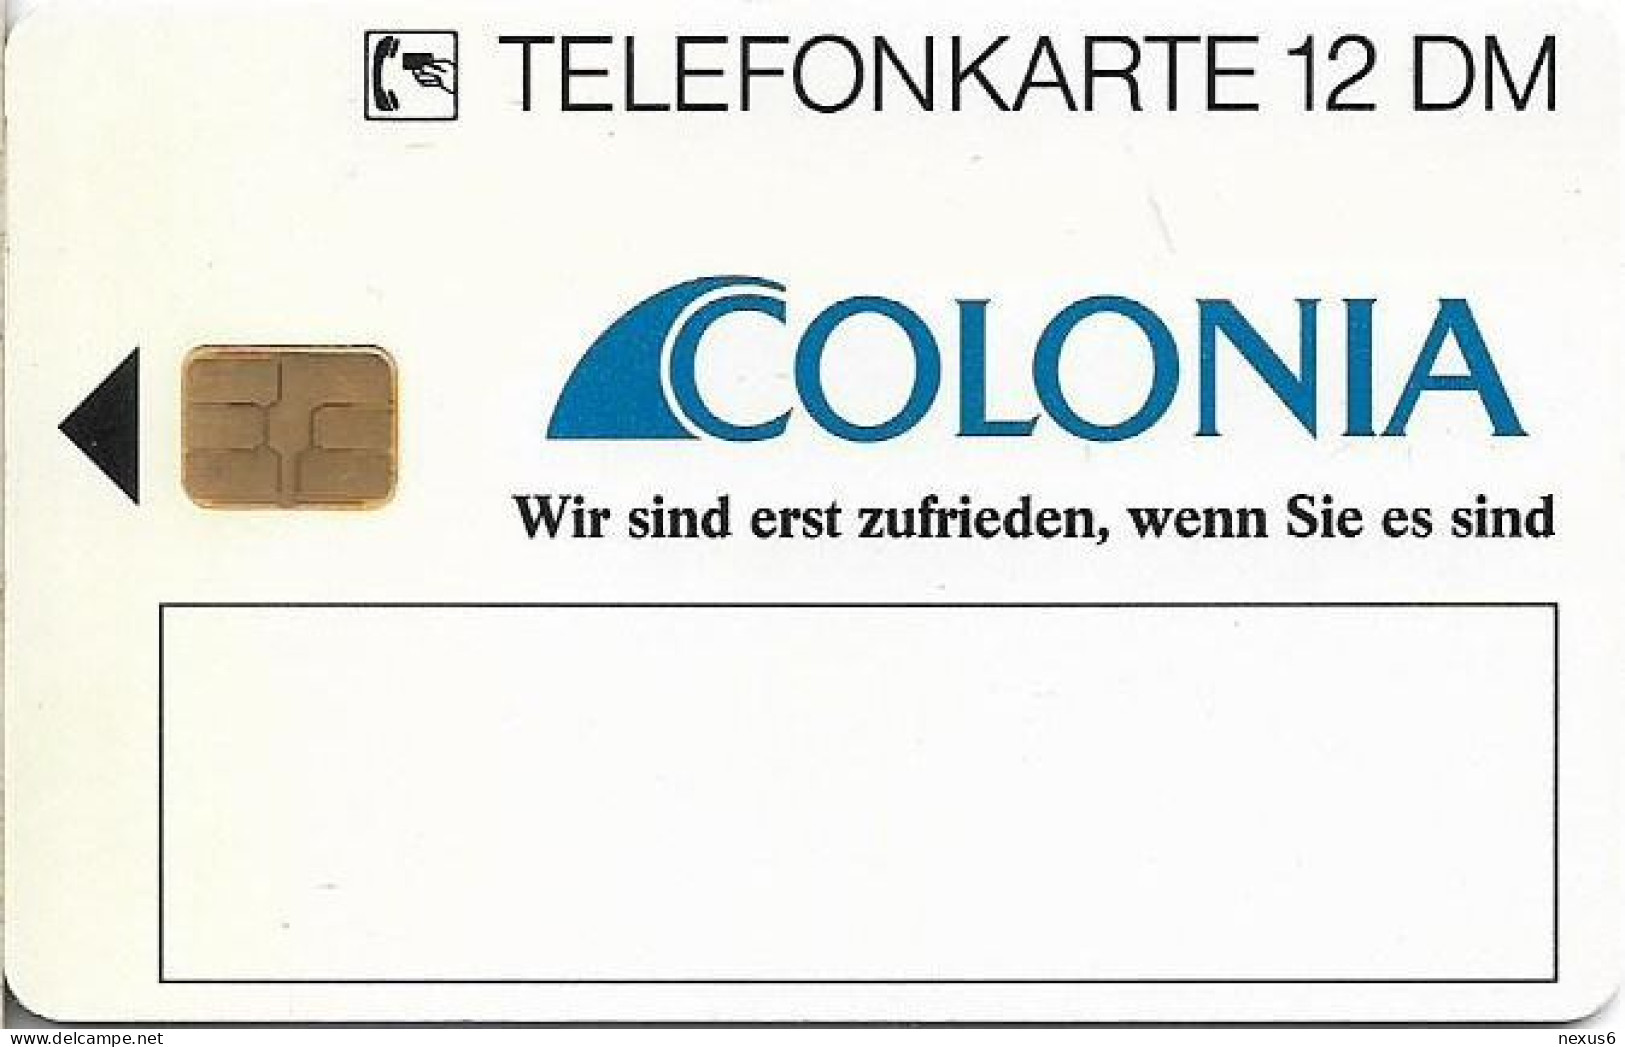 Germany - Colonia Versicherung 2 – Regen - O 0303B - 09.1993, 12DM, 3.000ex, Mint - O-Series : Customers Sets